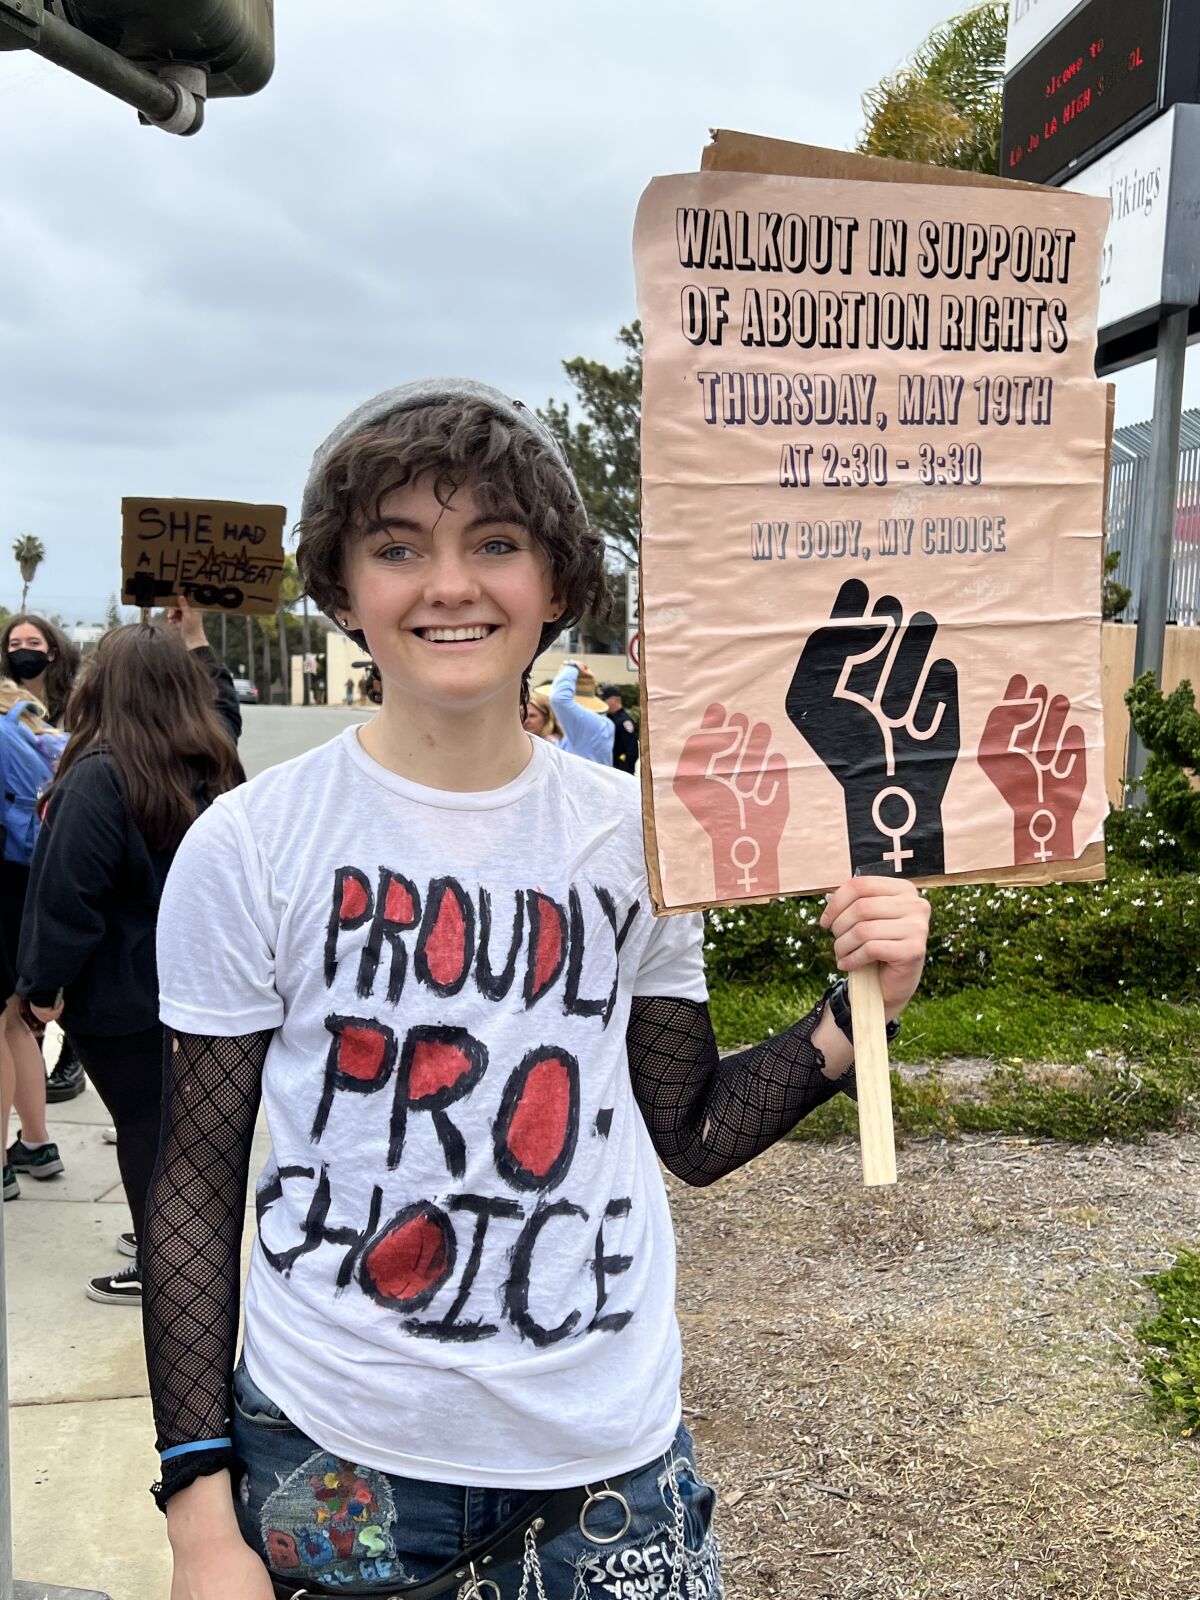 Junior Jaime Shafer, 17, organized the May 19 student walkout at La Jolla High School.